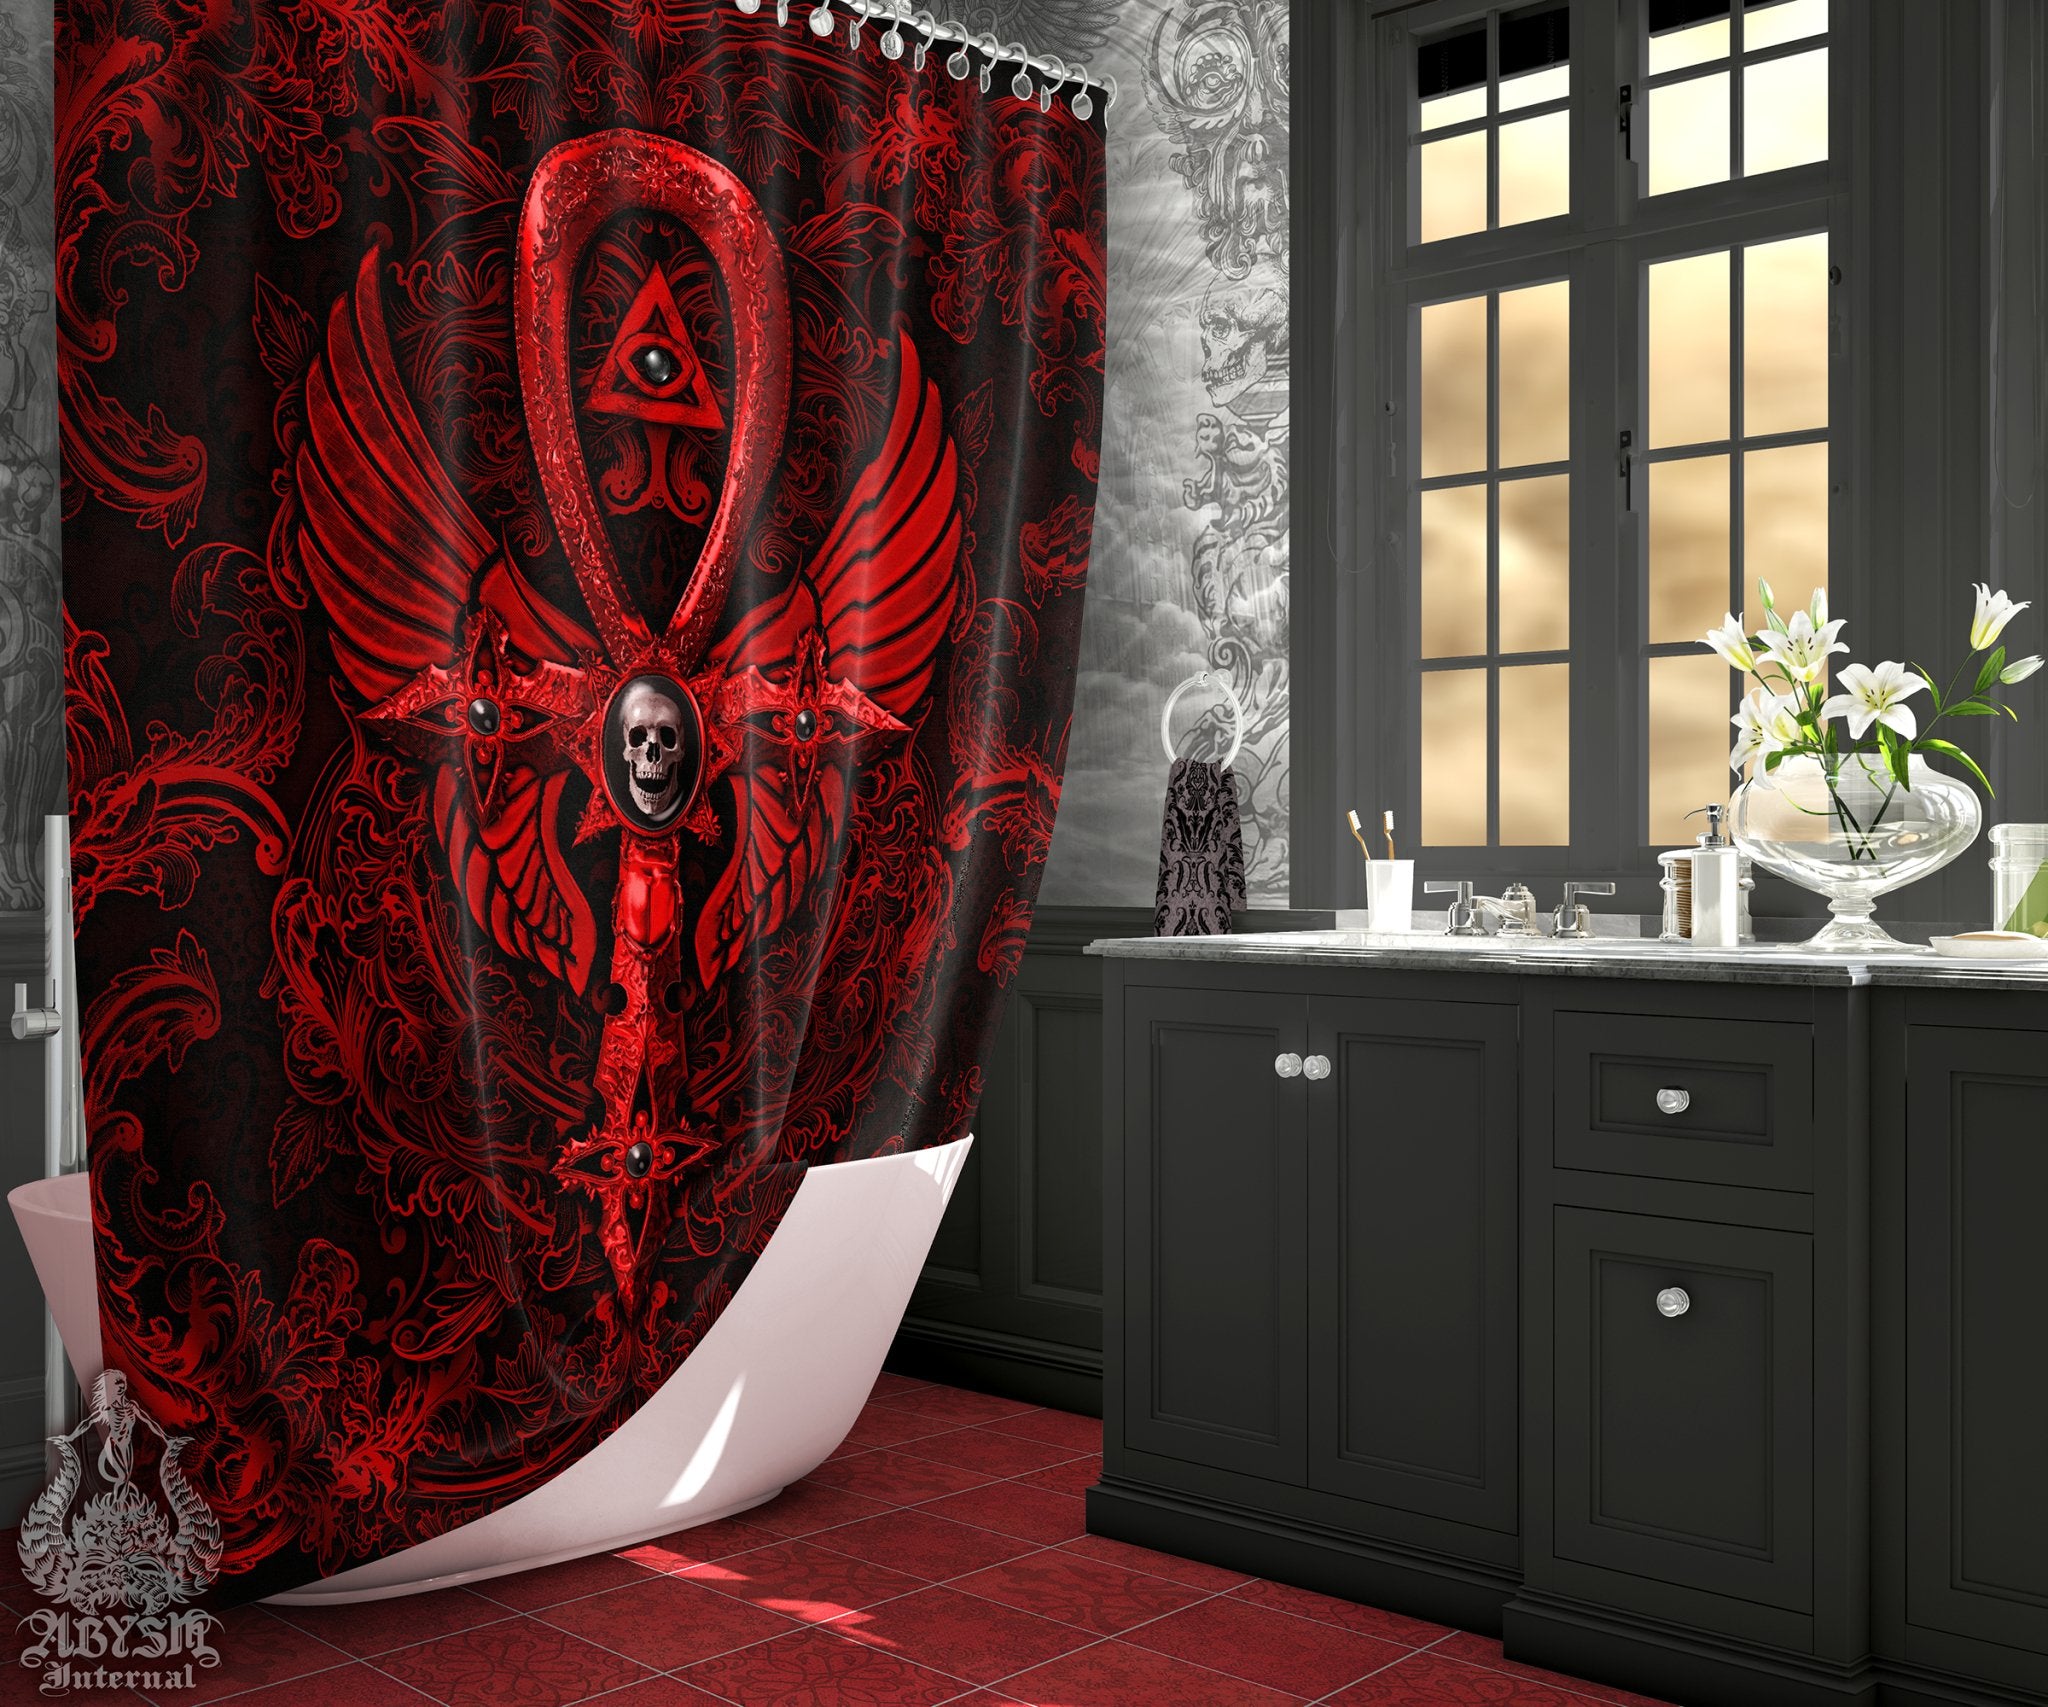 Gothic Shower Curtain, 71x74 inches, Goth Ankh Cross, Dark Bathroom Decor, Occult - Black, Red, Gold, 3 Colors - Abysm Internal